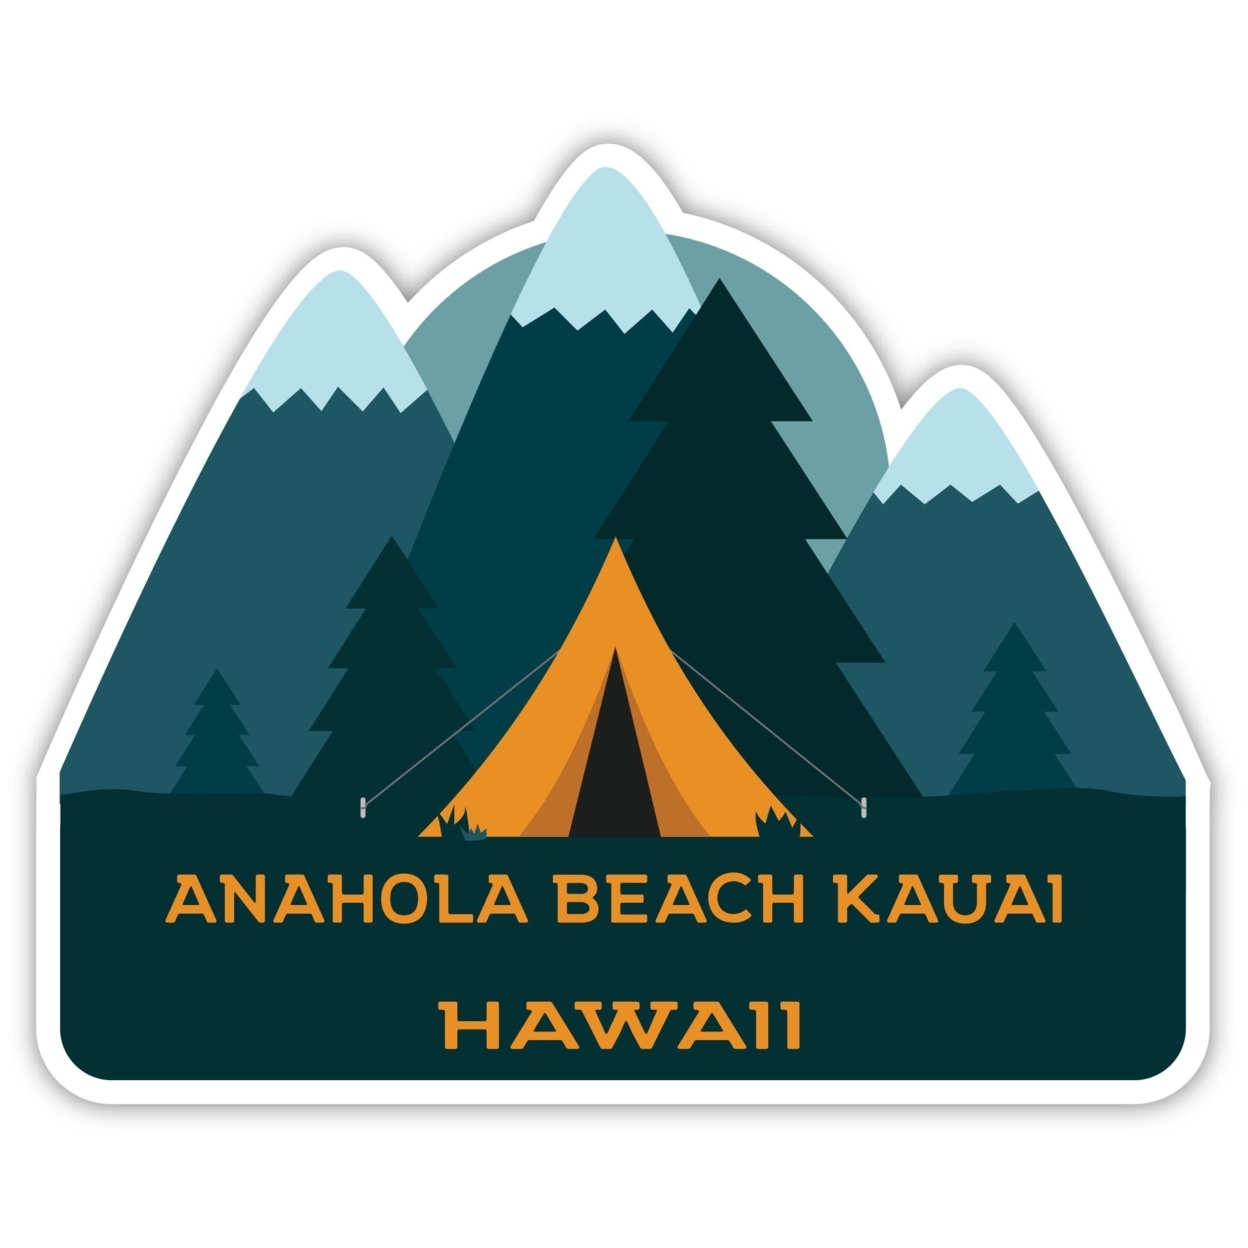 Anahola Beach Kauai Hawaii Souvenir Decorative Stickers (Choose Theme And Size) - 4-Pack, 10-Inch, Tent